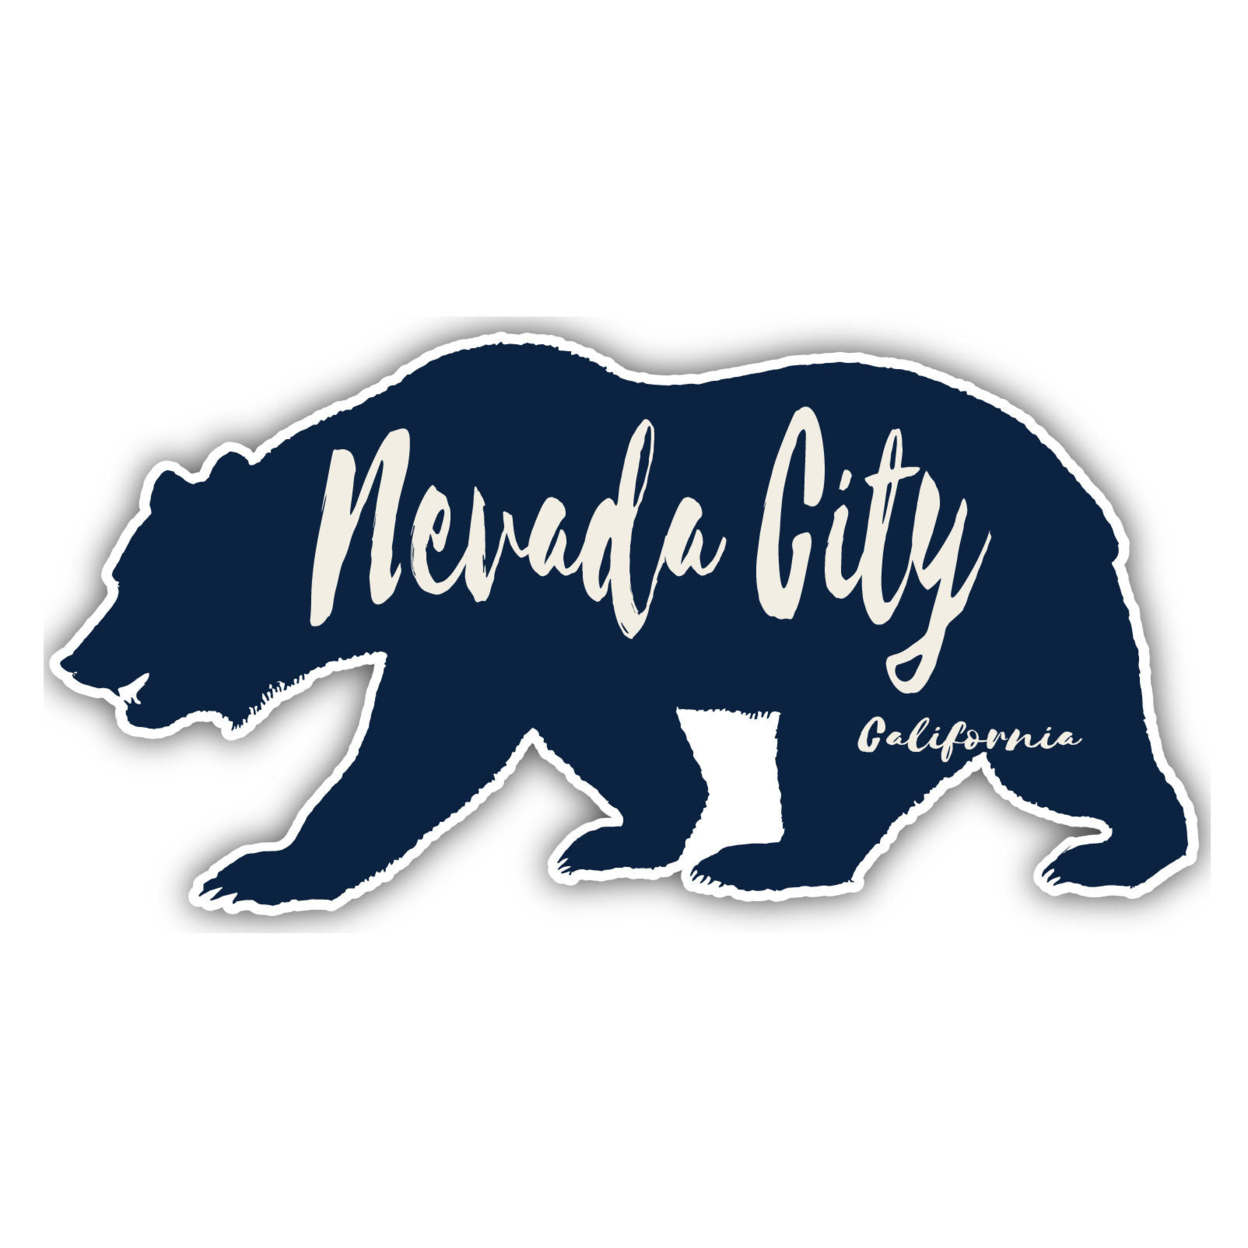 Nevada City California Souvenir Decorative Stickers (Choose Theme And Size) - Single Unit, 2-Inch, Tent